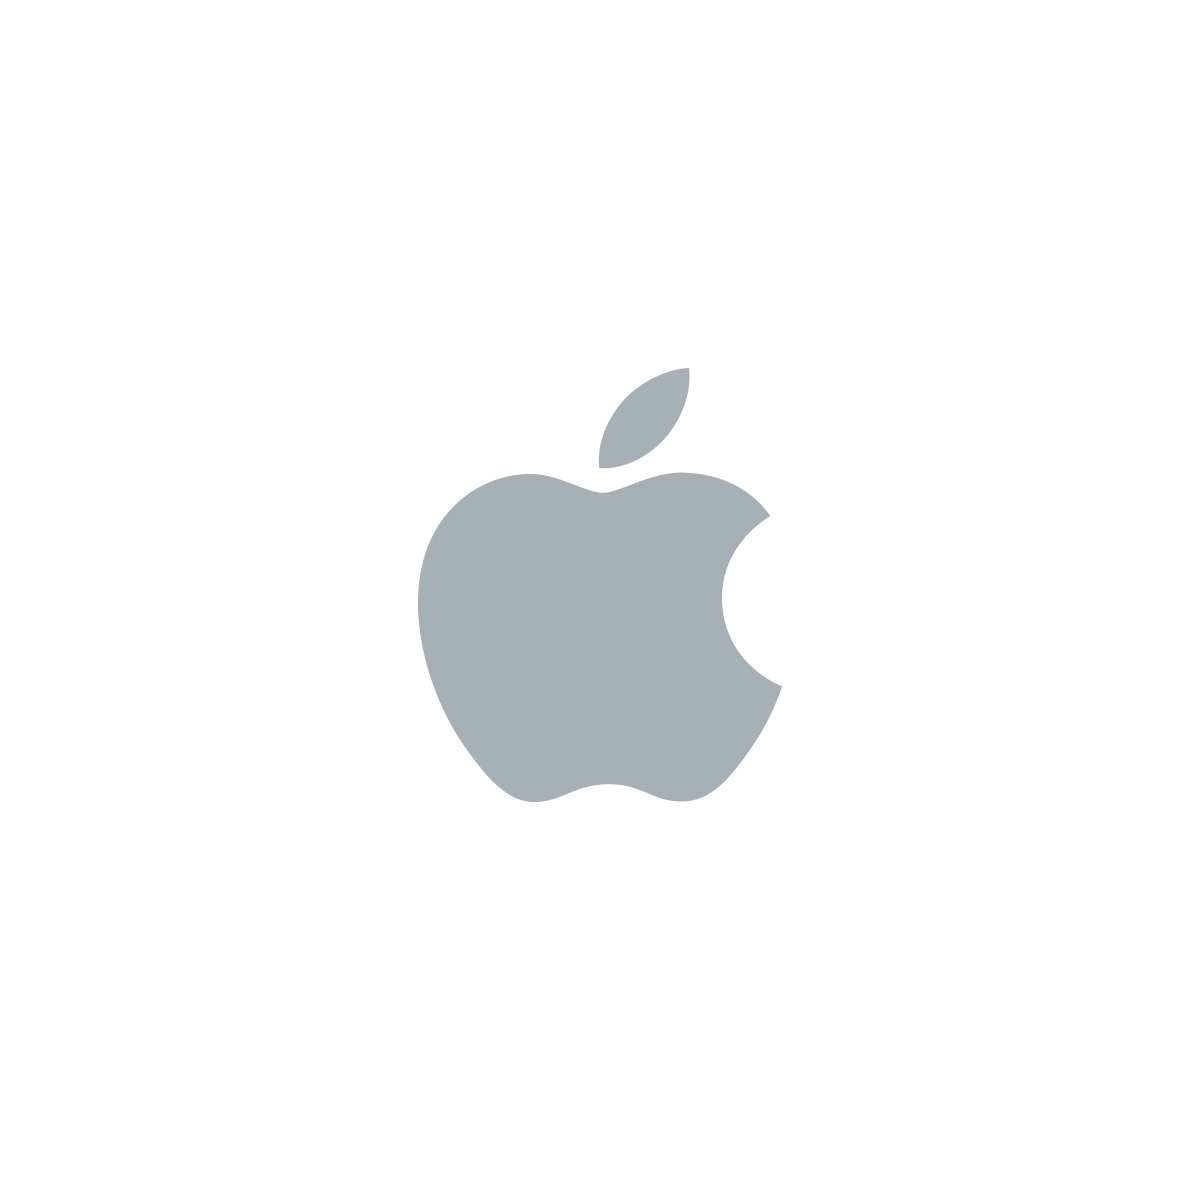 apple itunes download for mac